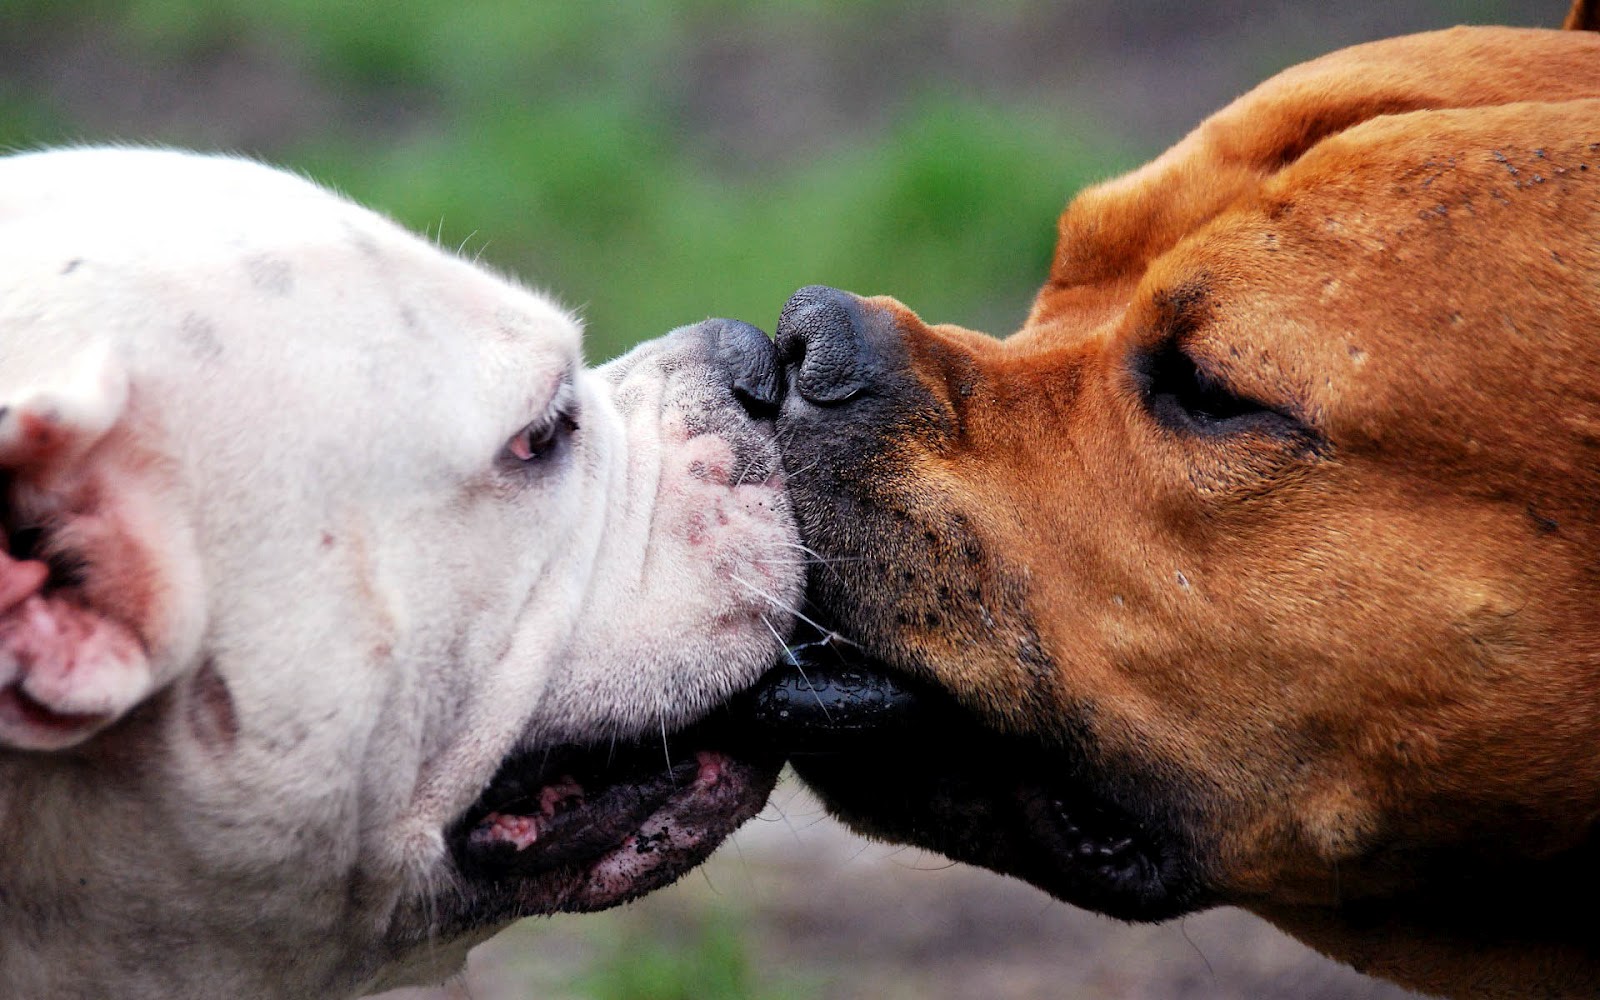 http://4.bp.blogspot.com/-RAL1cd34Wus/UCJMprG1_rI/AAAAAAAAAEk/N8HrrnUNrlQ/s1600/hd-dog-wallpaper-with-two-dogs-kissing-dogs-wallpapers.jpg